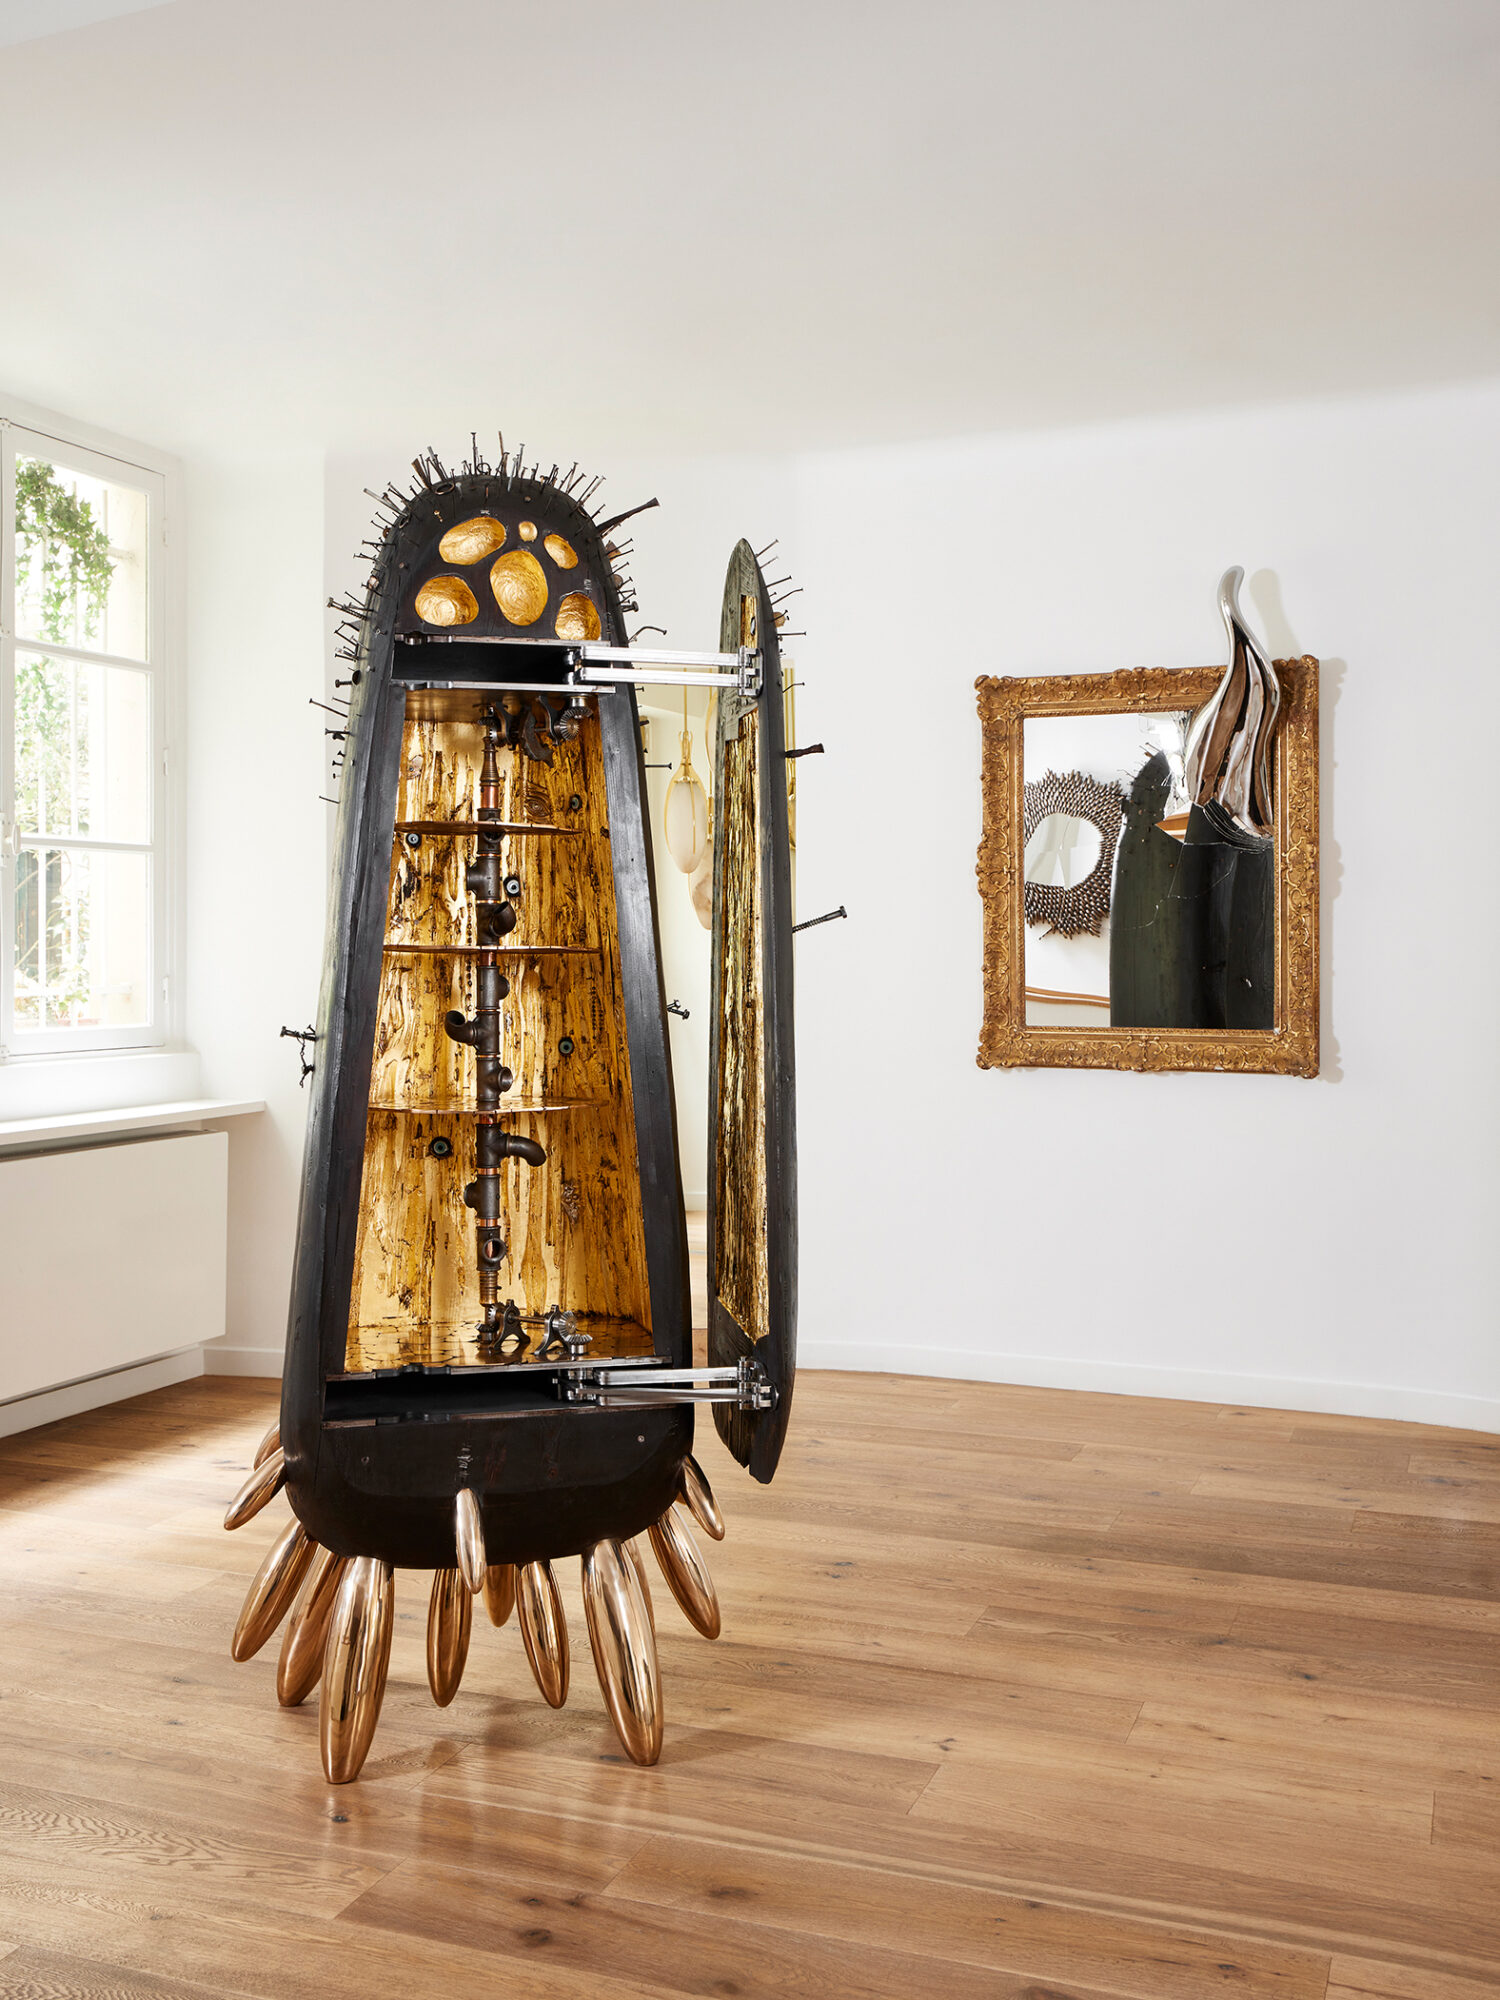 ERWAN BOULLOUD | DE NATURA RERUM - Galerie Negropontes